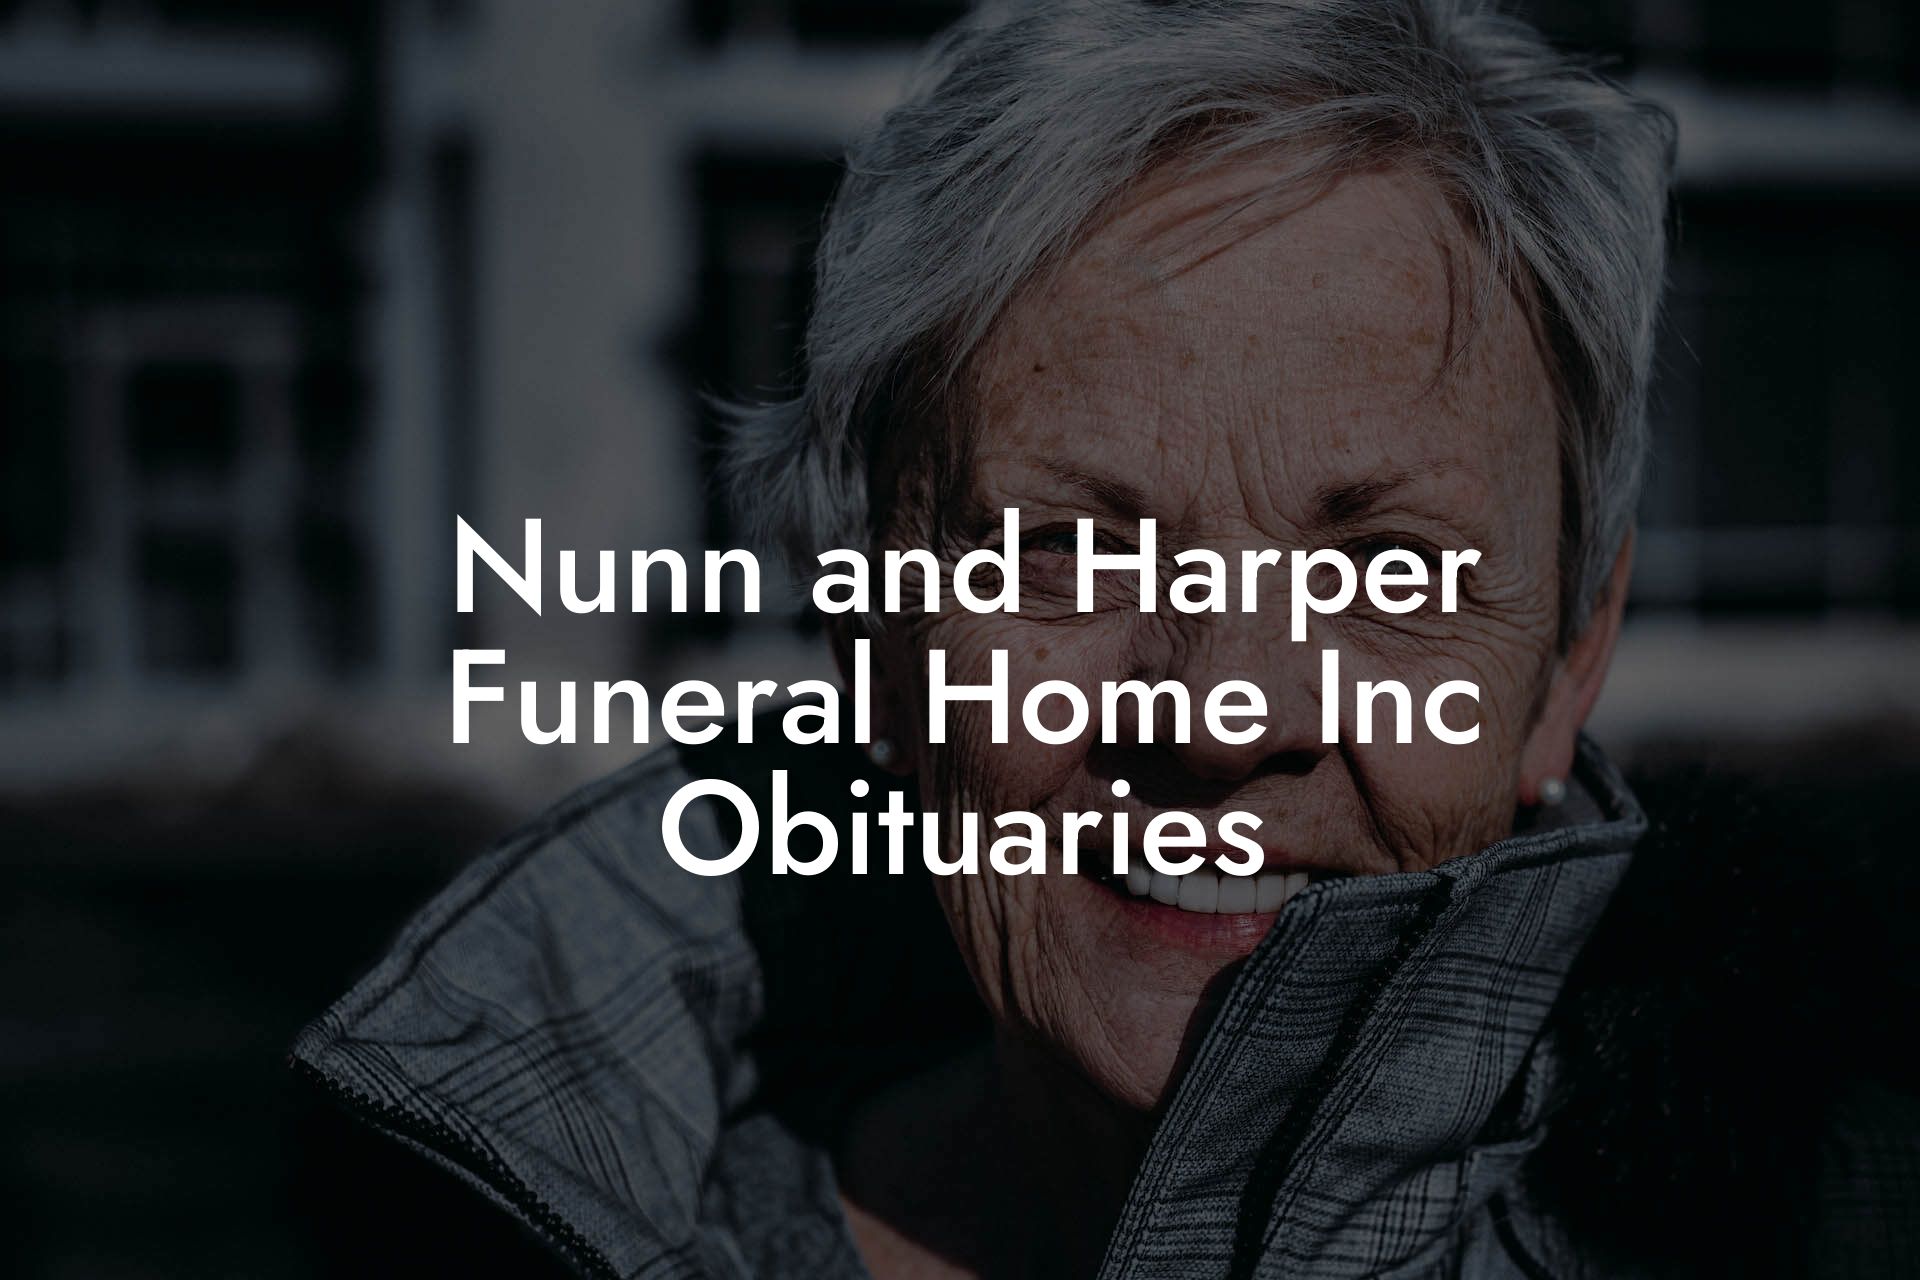 Nunn and Harper Funeral Home, Inc. Obituaries